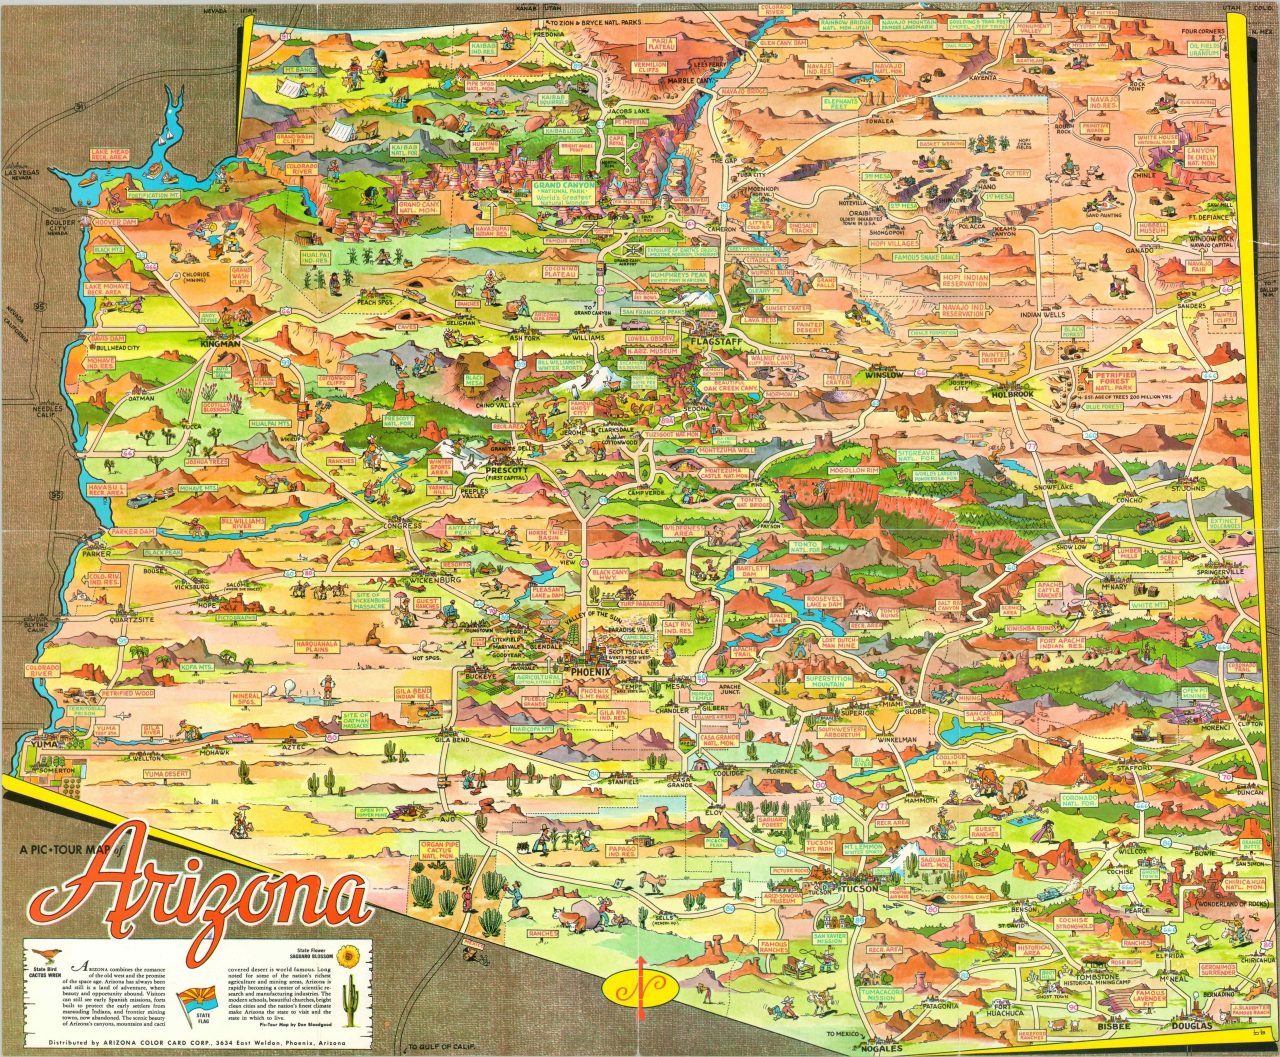 tourist attractions in arizona map